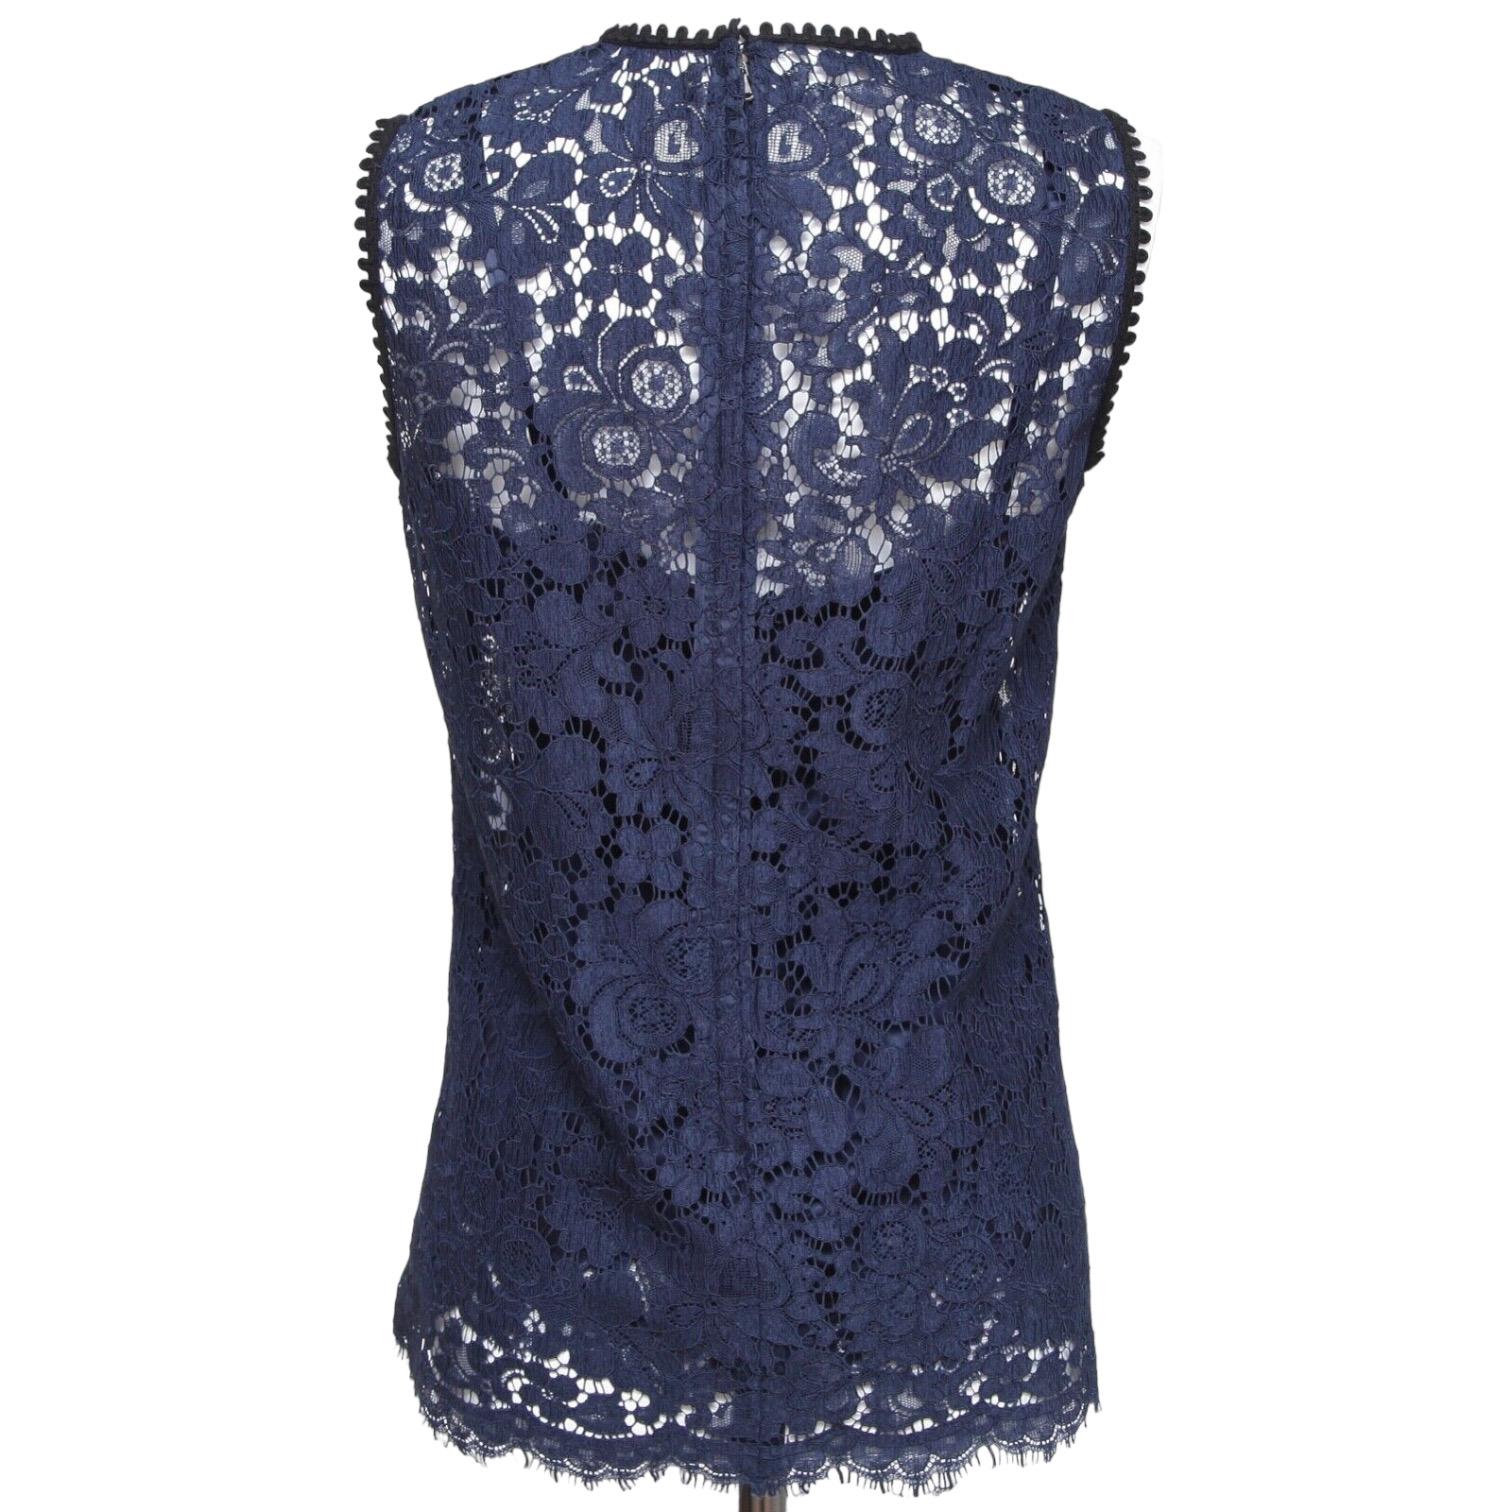 DOLCE & GABBANA Blouse Shirt Top Navy Blue Black Sleeveless Lace Sz 40 Ret $1495 For Sale 2